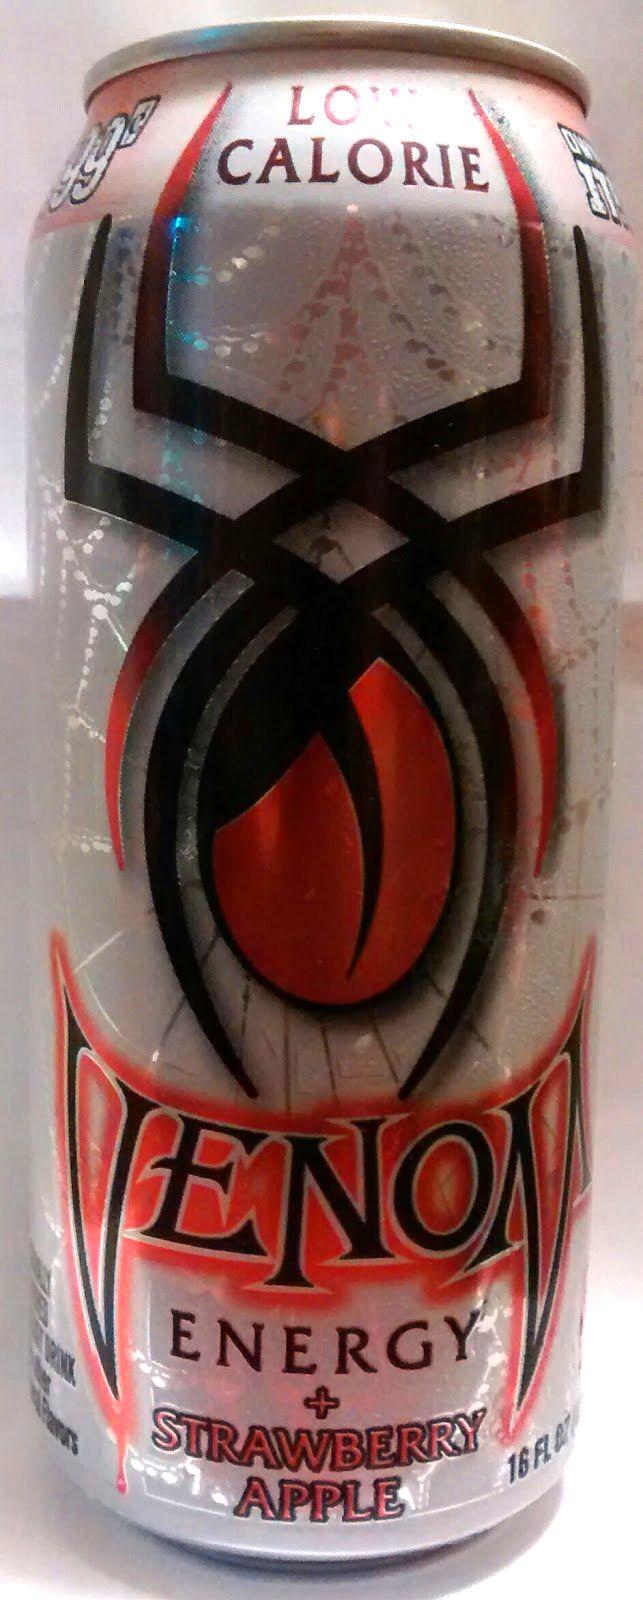 Venom Energy Drink Logo - Caffeine King: Venom Low Calorie Strawberry Apple Energy Drink Review